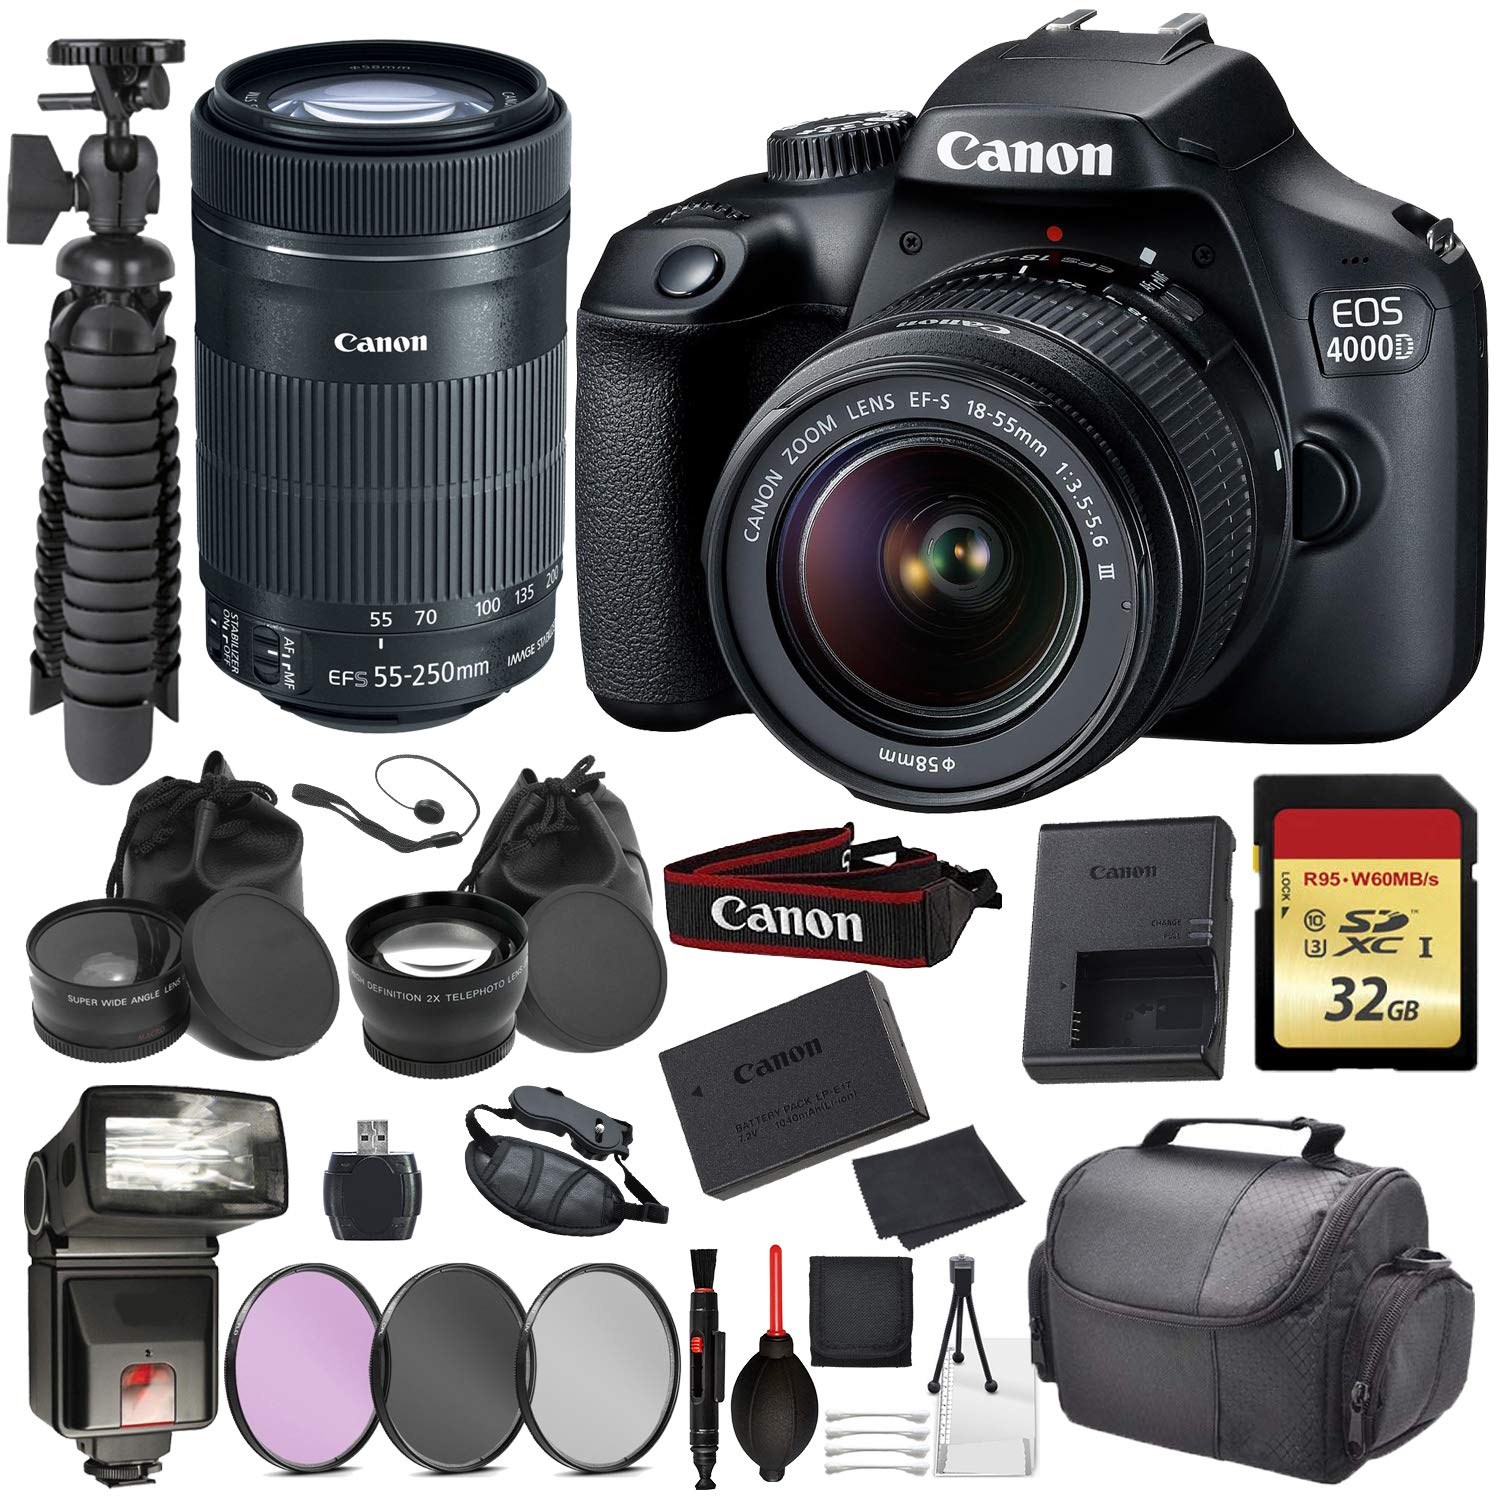 Canon EOS Rebel 4000D Digital SLR Camera with EF-S 18-55mm + EF-S 55-250mm STM (Black) Essential Accessory Bundle Packag